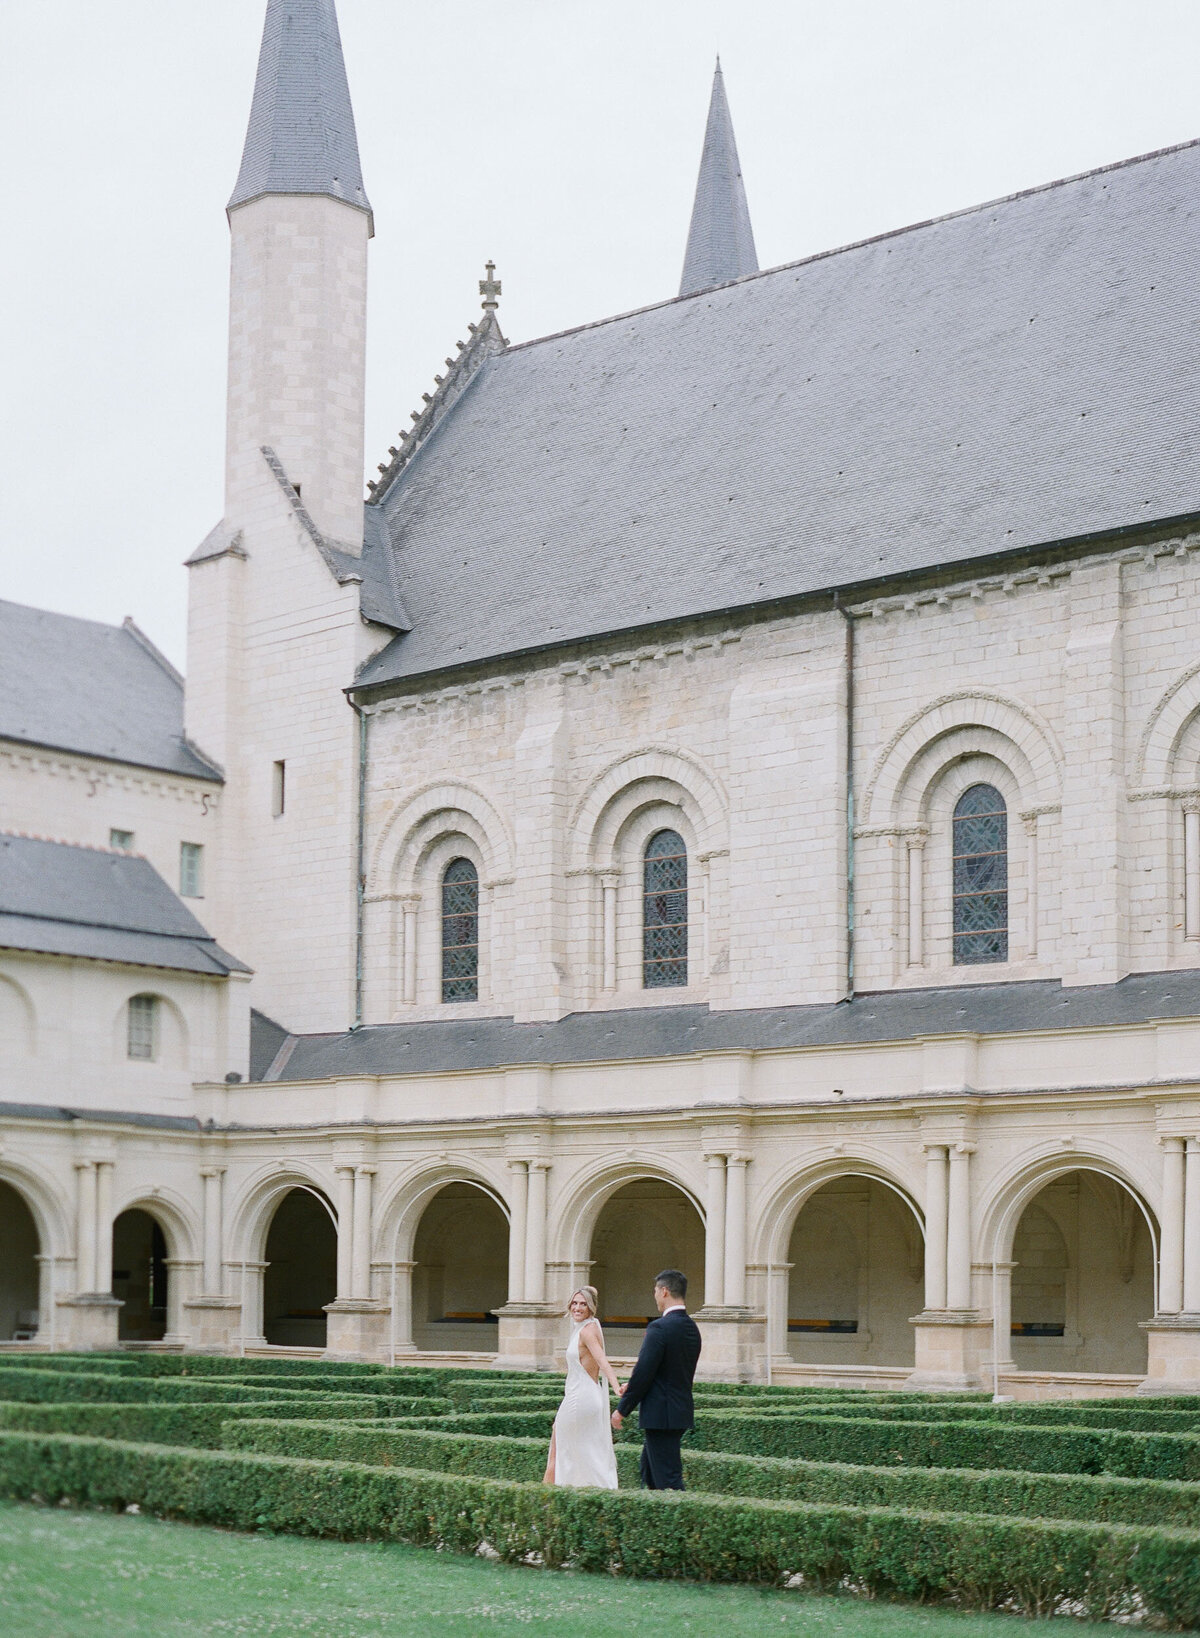 Alexandra-Vonk-pre-wedding-session-chateau-de-jalesnes-abbaye-Fontevraud-61